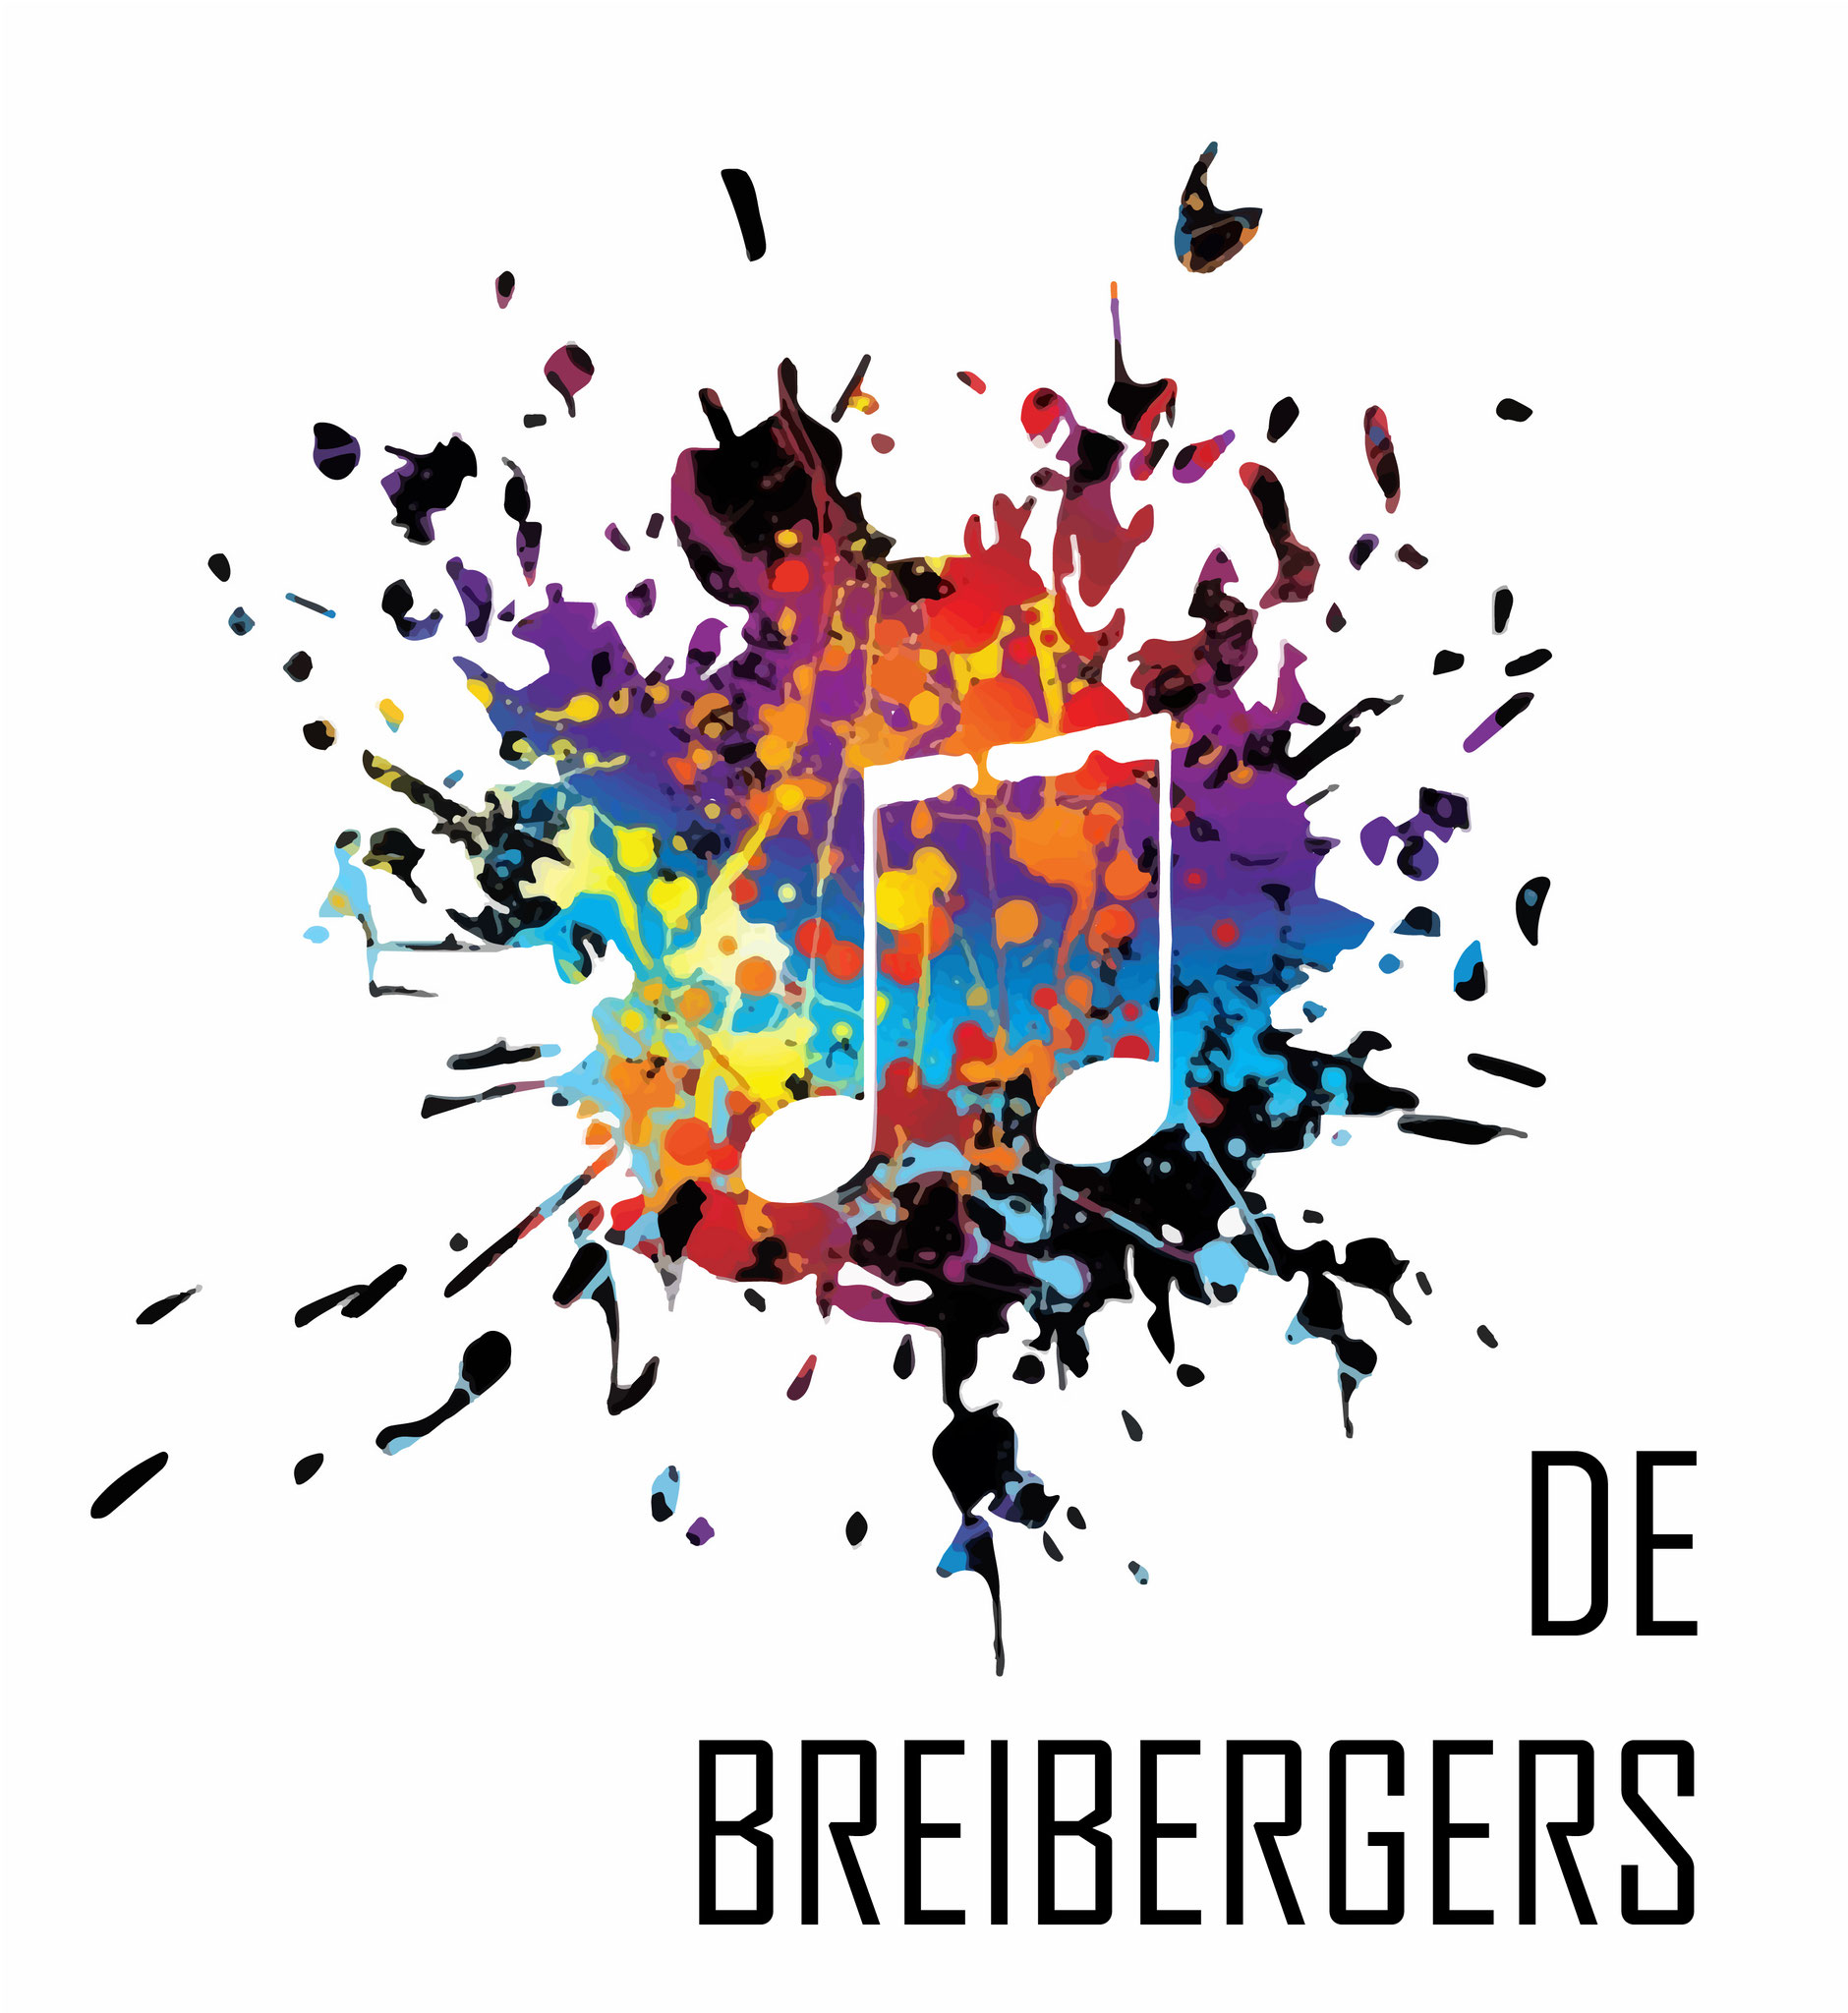 Logo "De Breibergers"